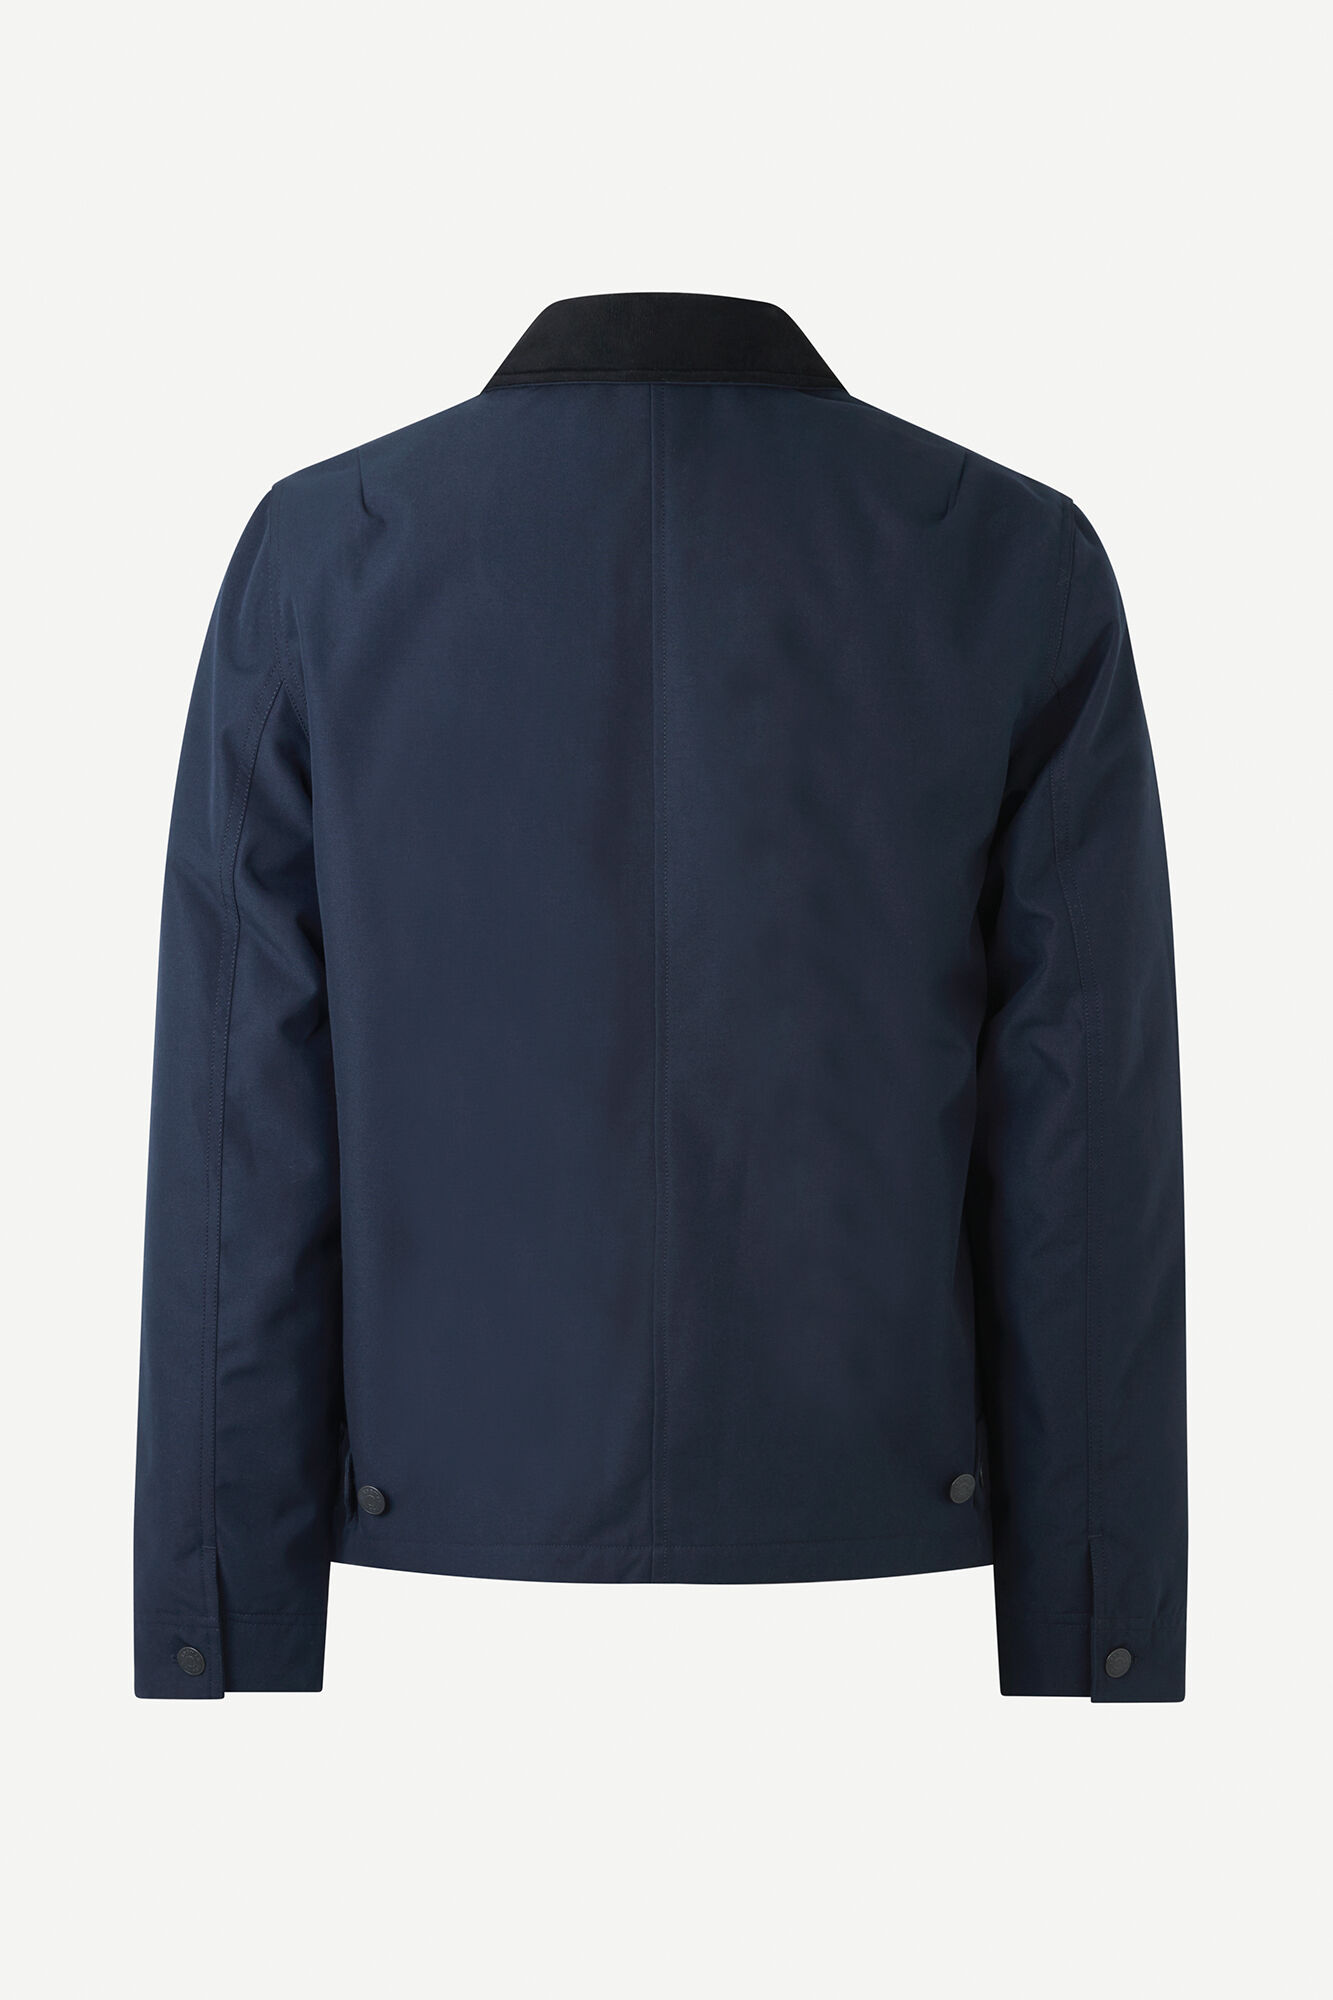 Jacket collection - Men's store | Samsøe Samsøe®